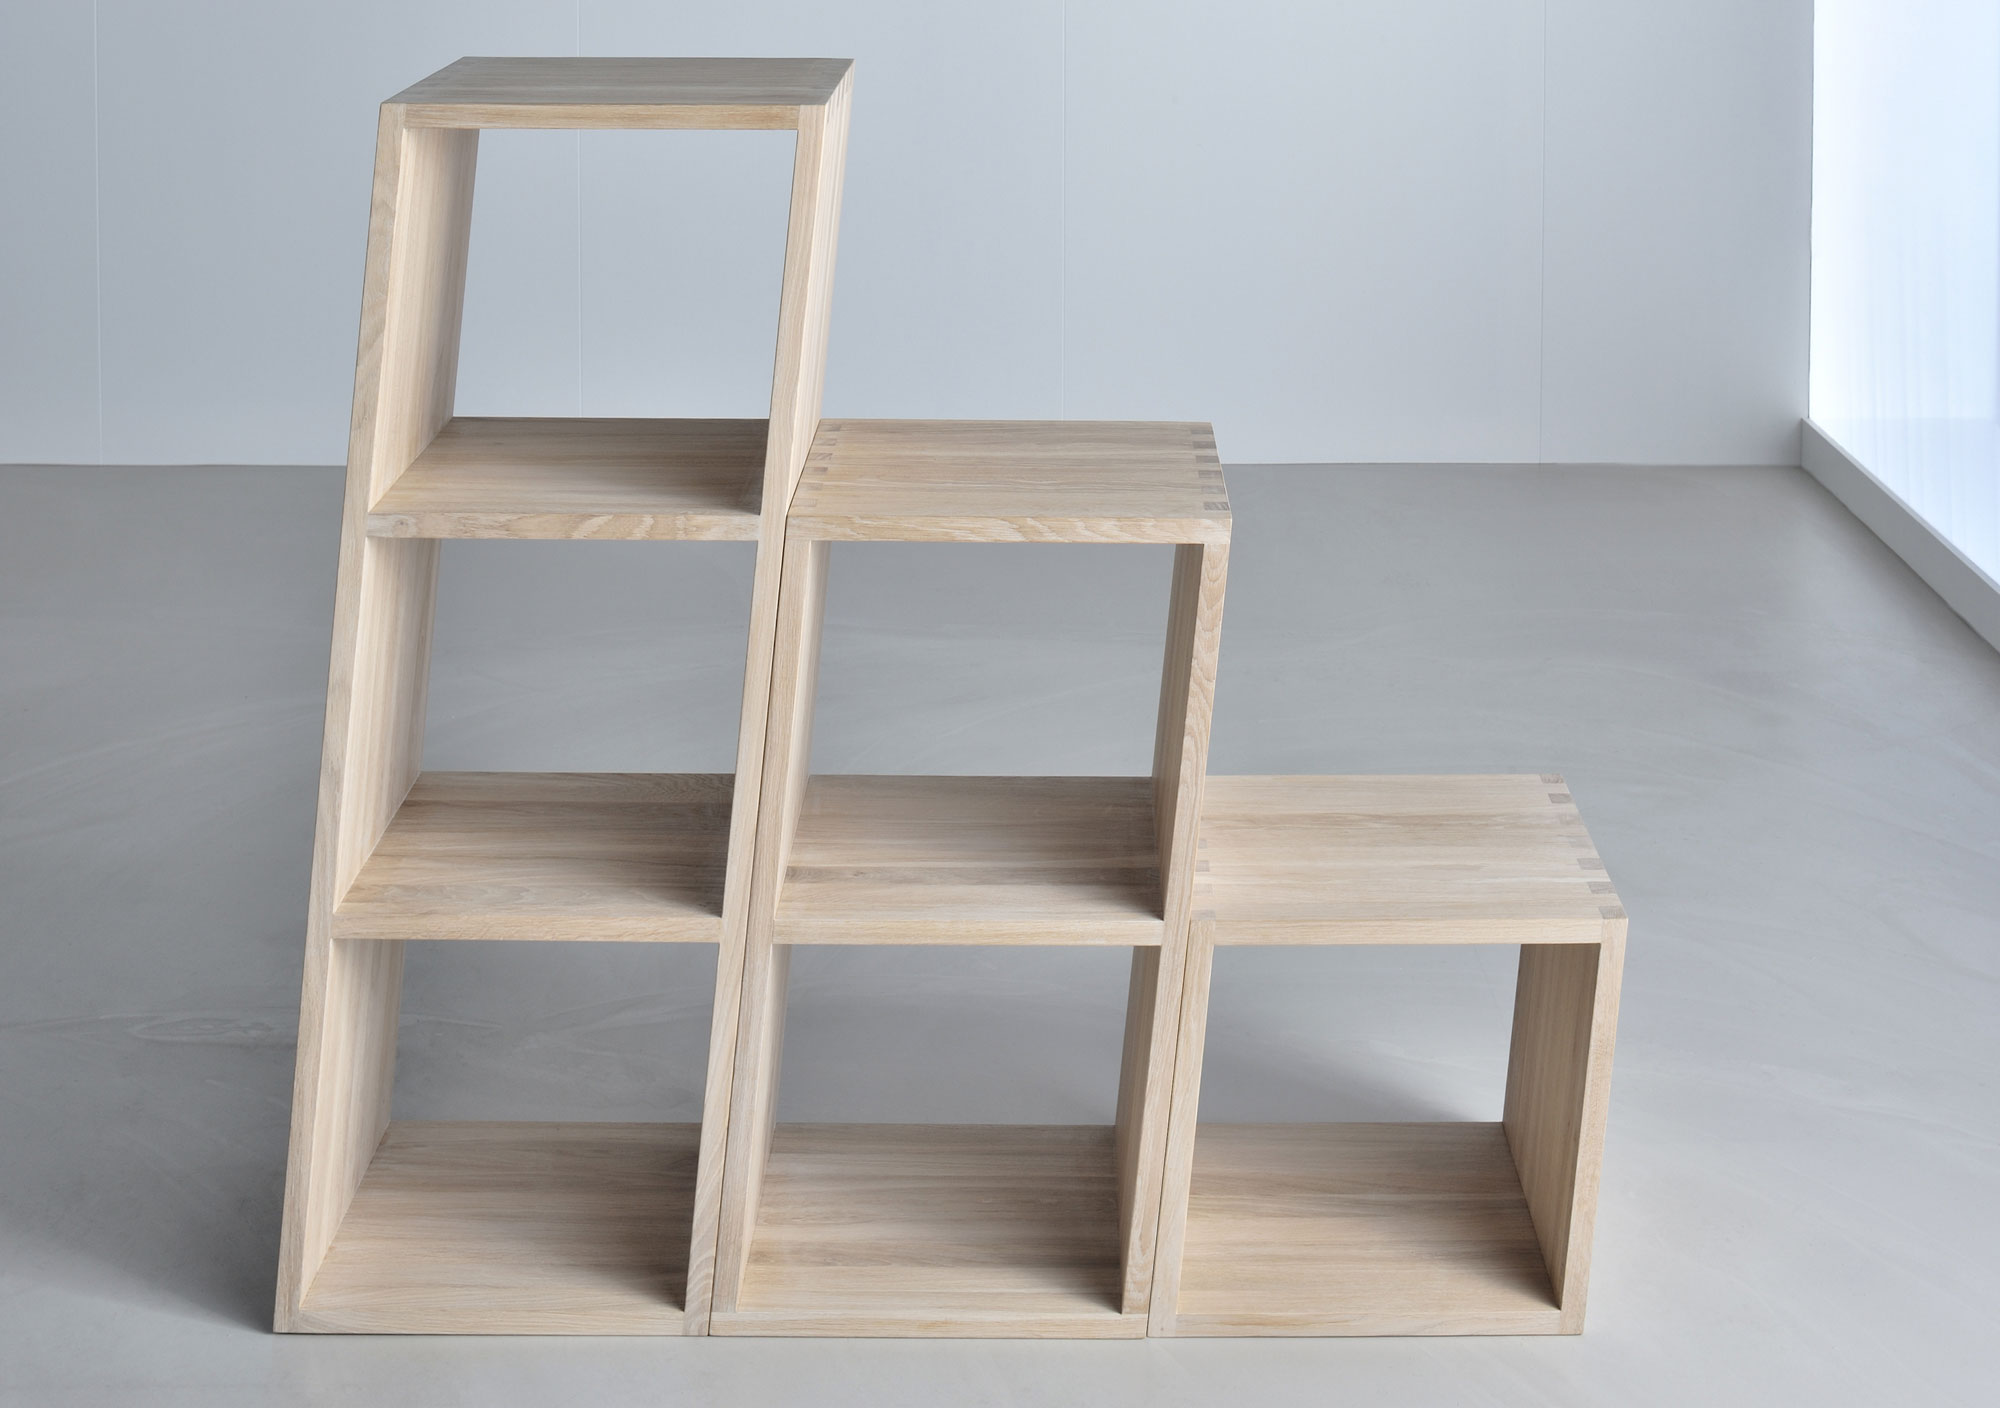 Wooden Designer Shelf PISA 3346 custom made in solid wood by vitamin design